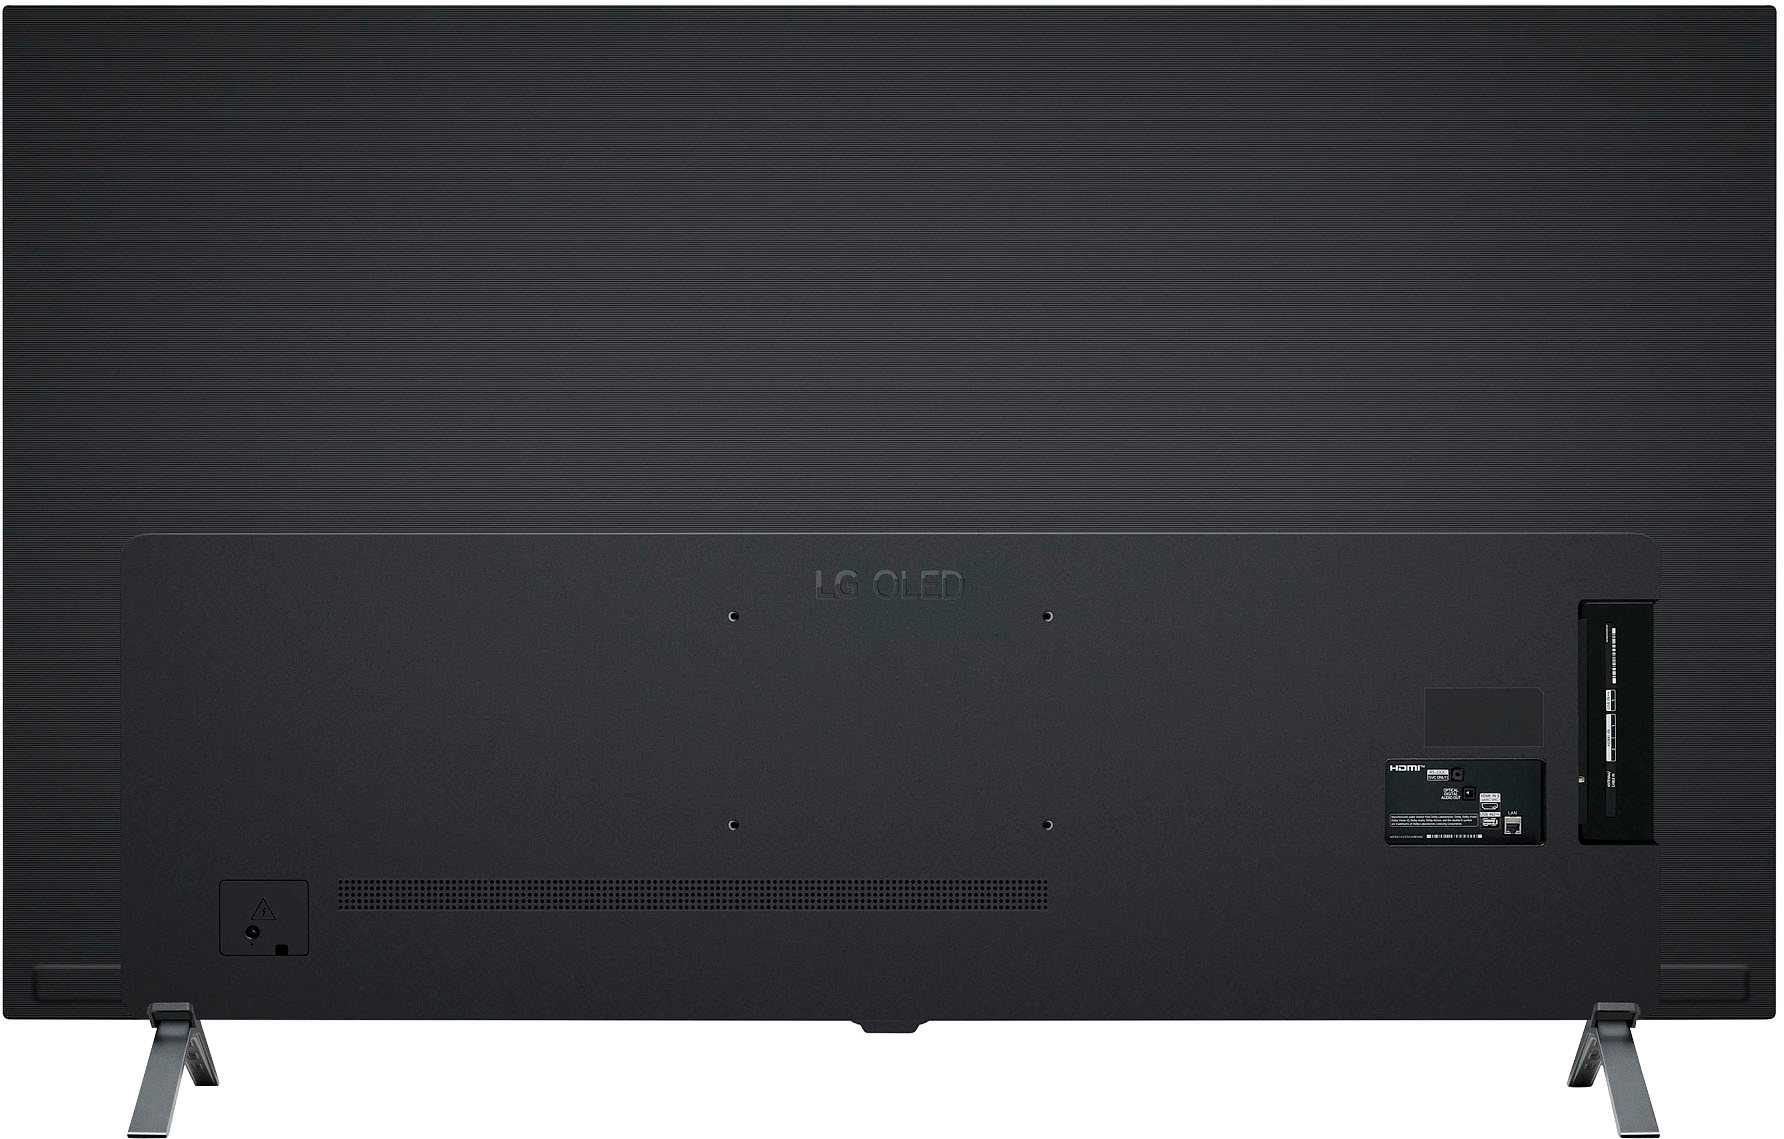 Best Buy: LG 48 Class A2 Series OLED 4K UHD Smart webOS TV OLED48A2PUA